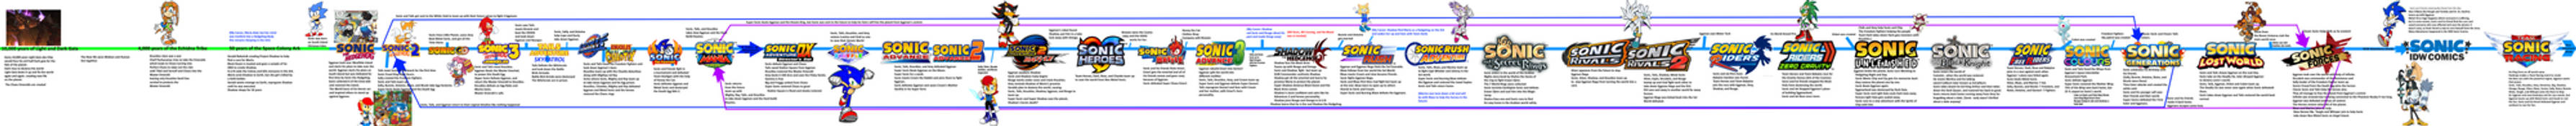 Sega Bio: Mighty the Armadillo by FrostTheHobidon on DeviantArt